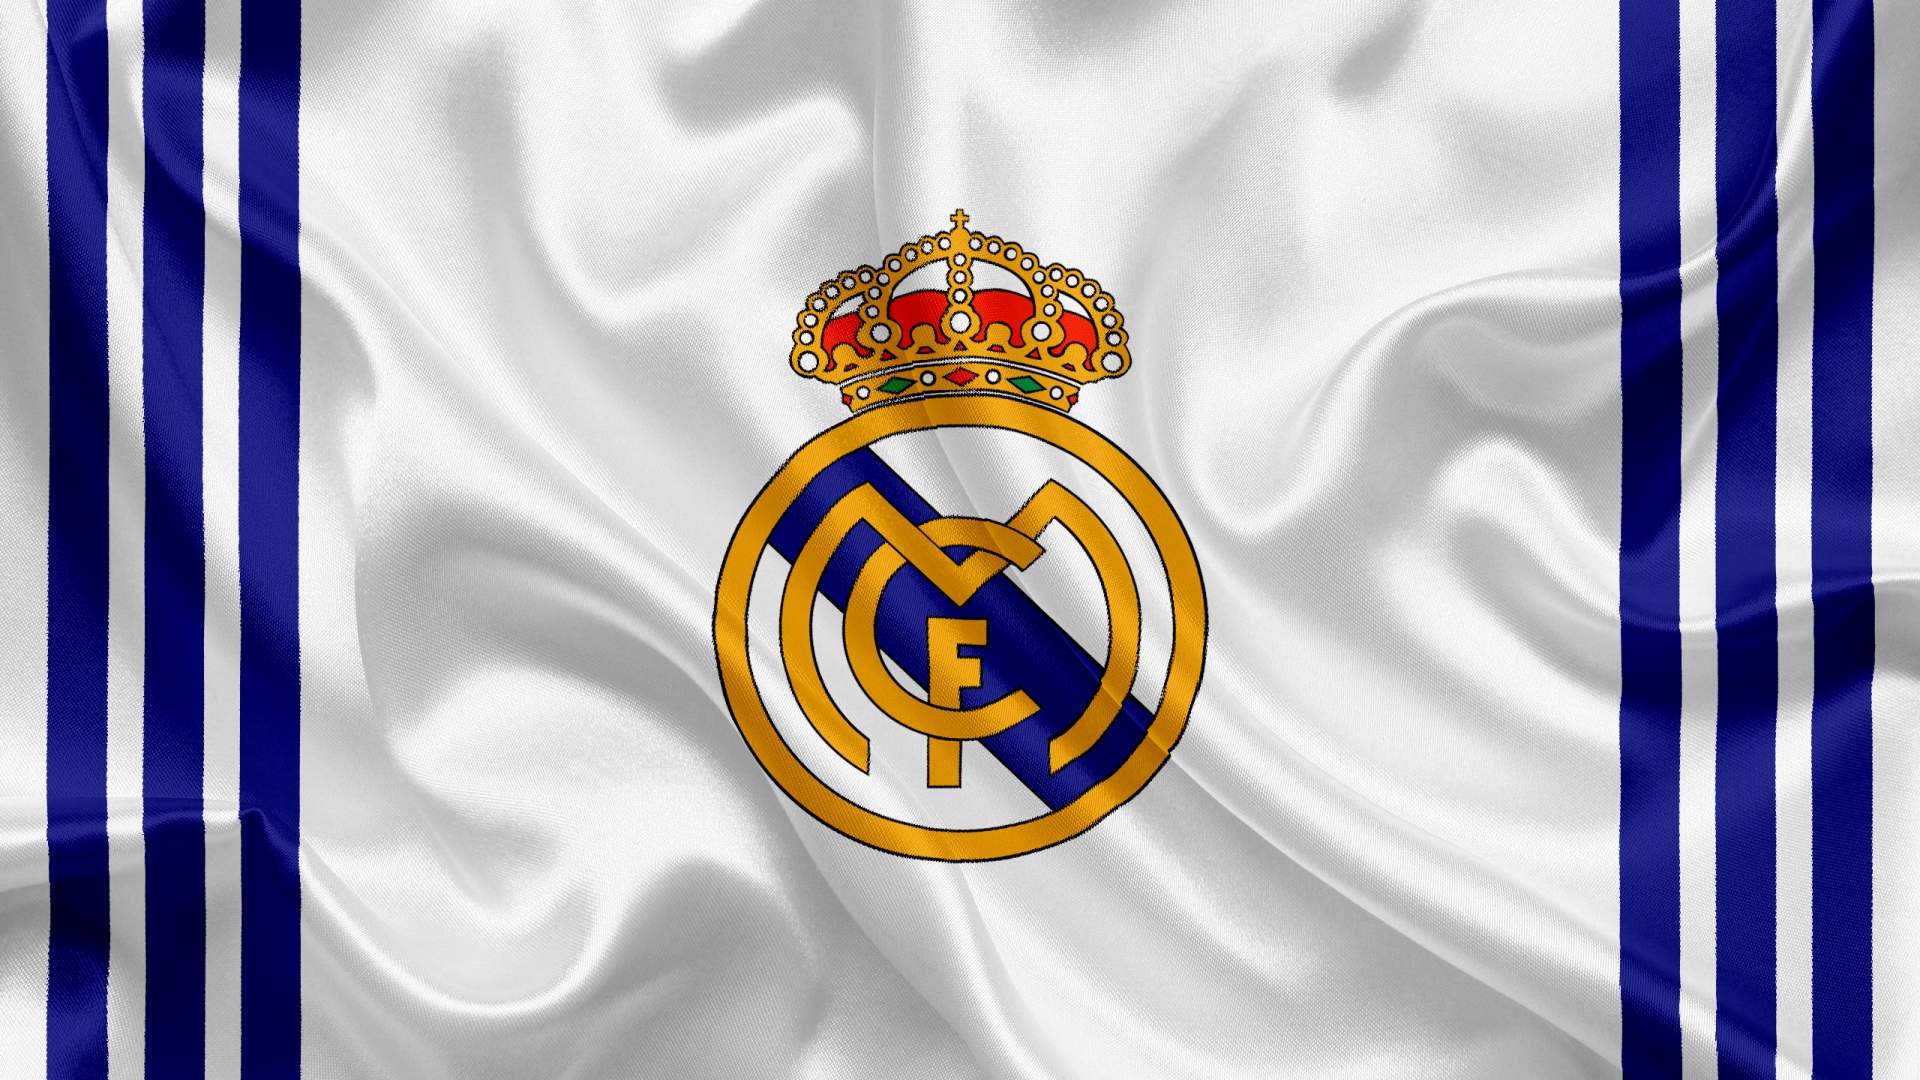 Real Madrid Wallpaper For Laptop Deskk. Real Madrid iPhone Wallpaper 4k Download